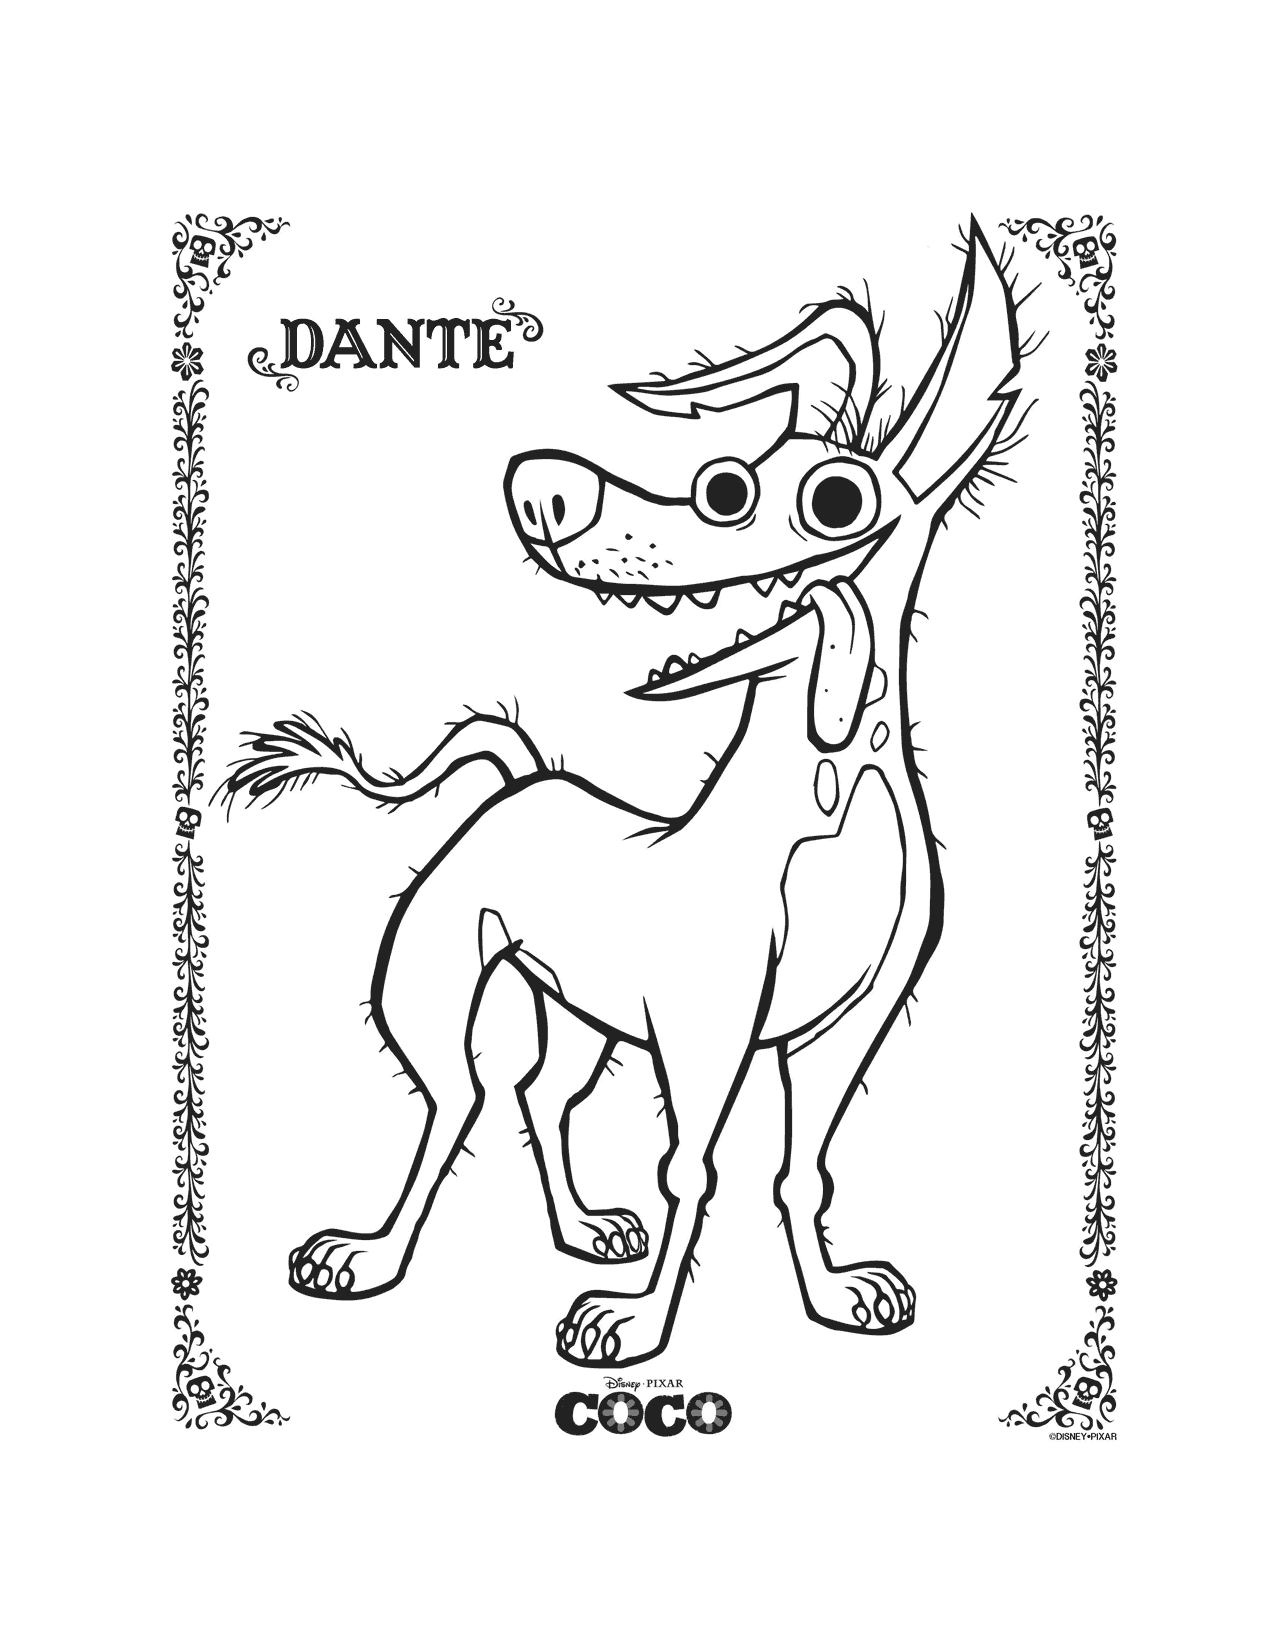 Dante Coco Coloring Page